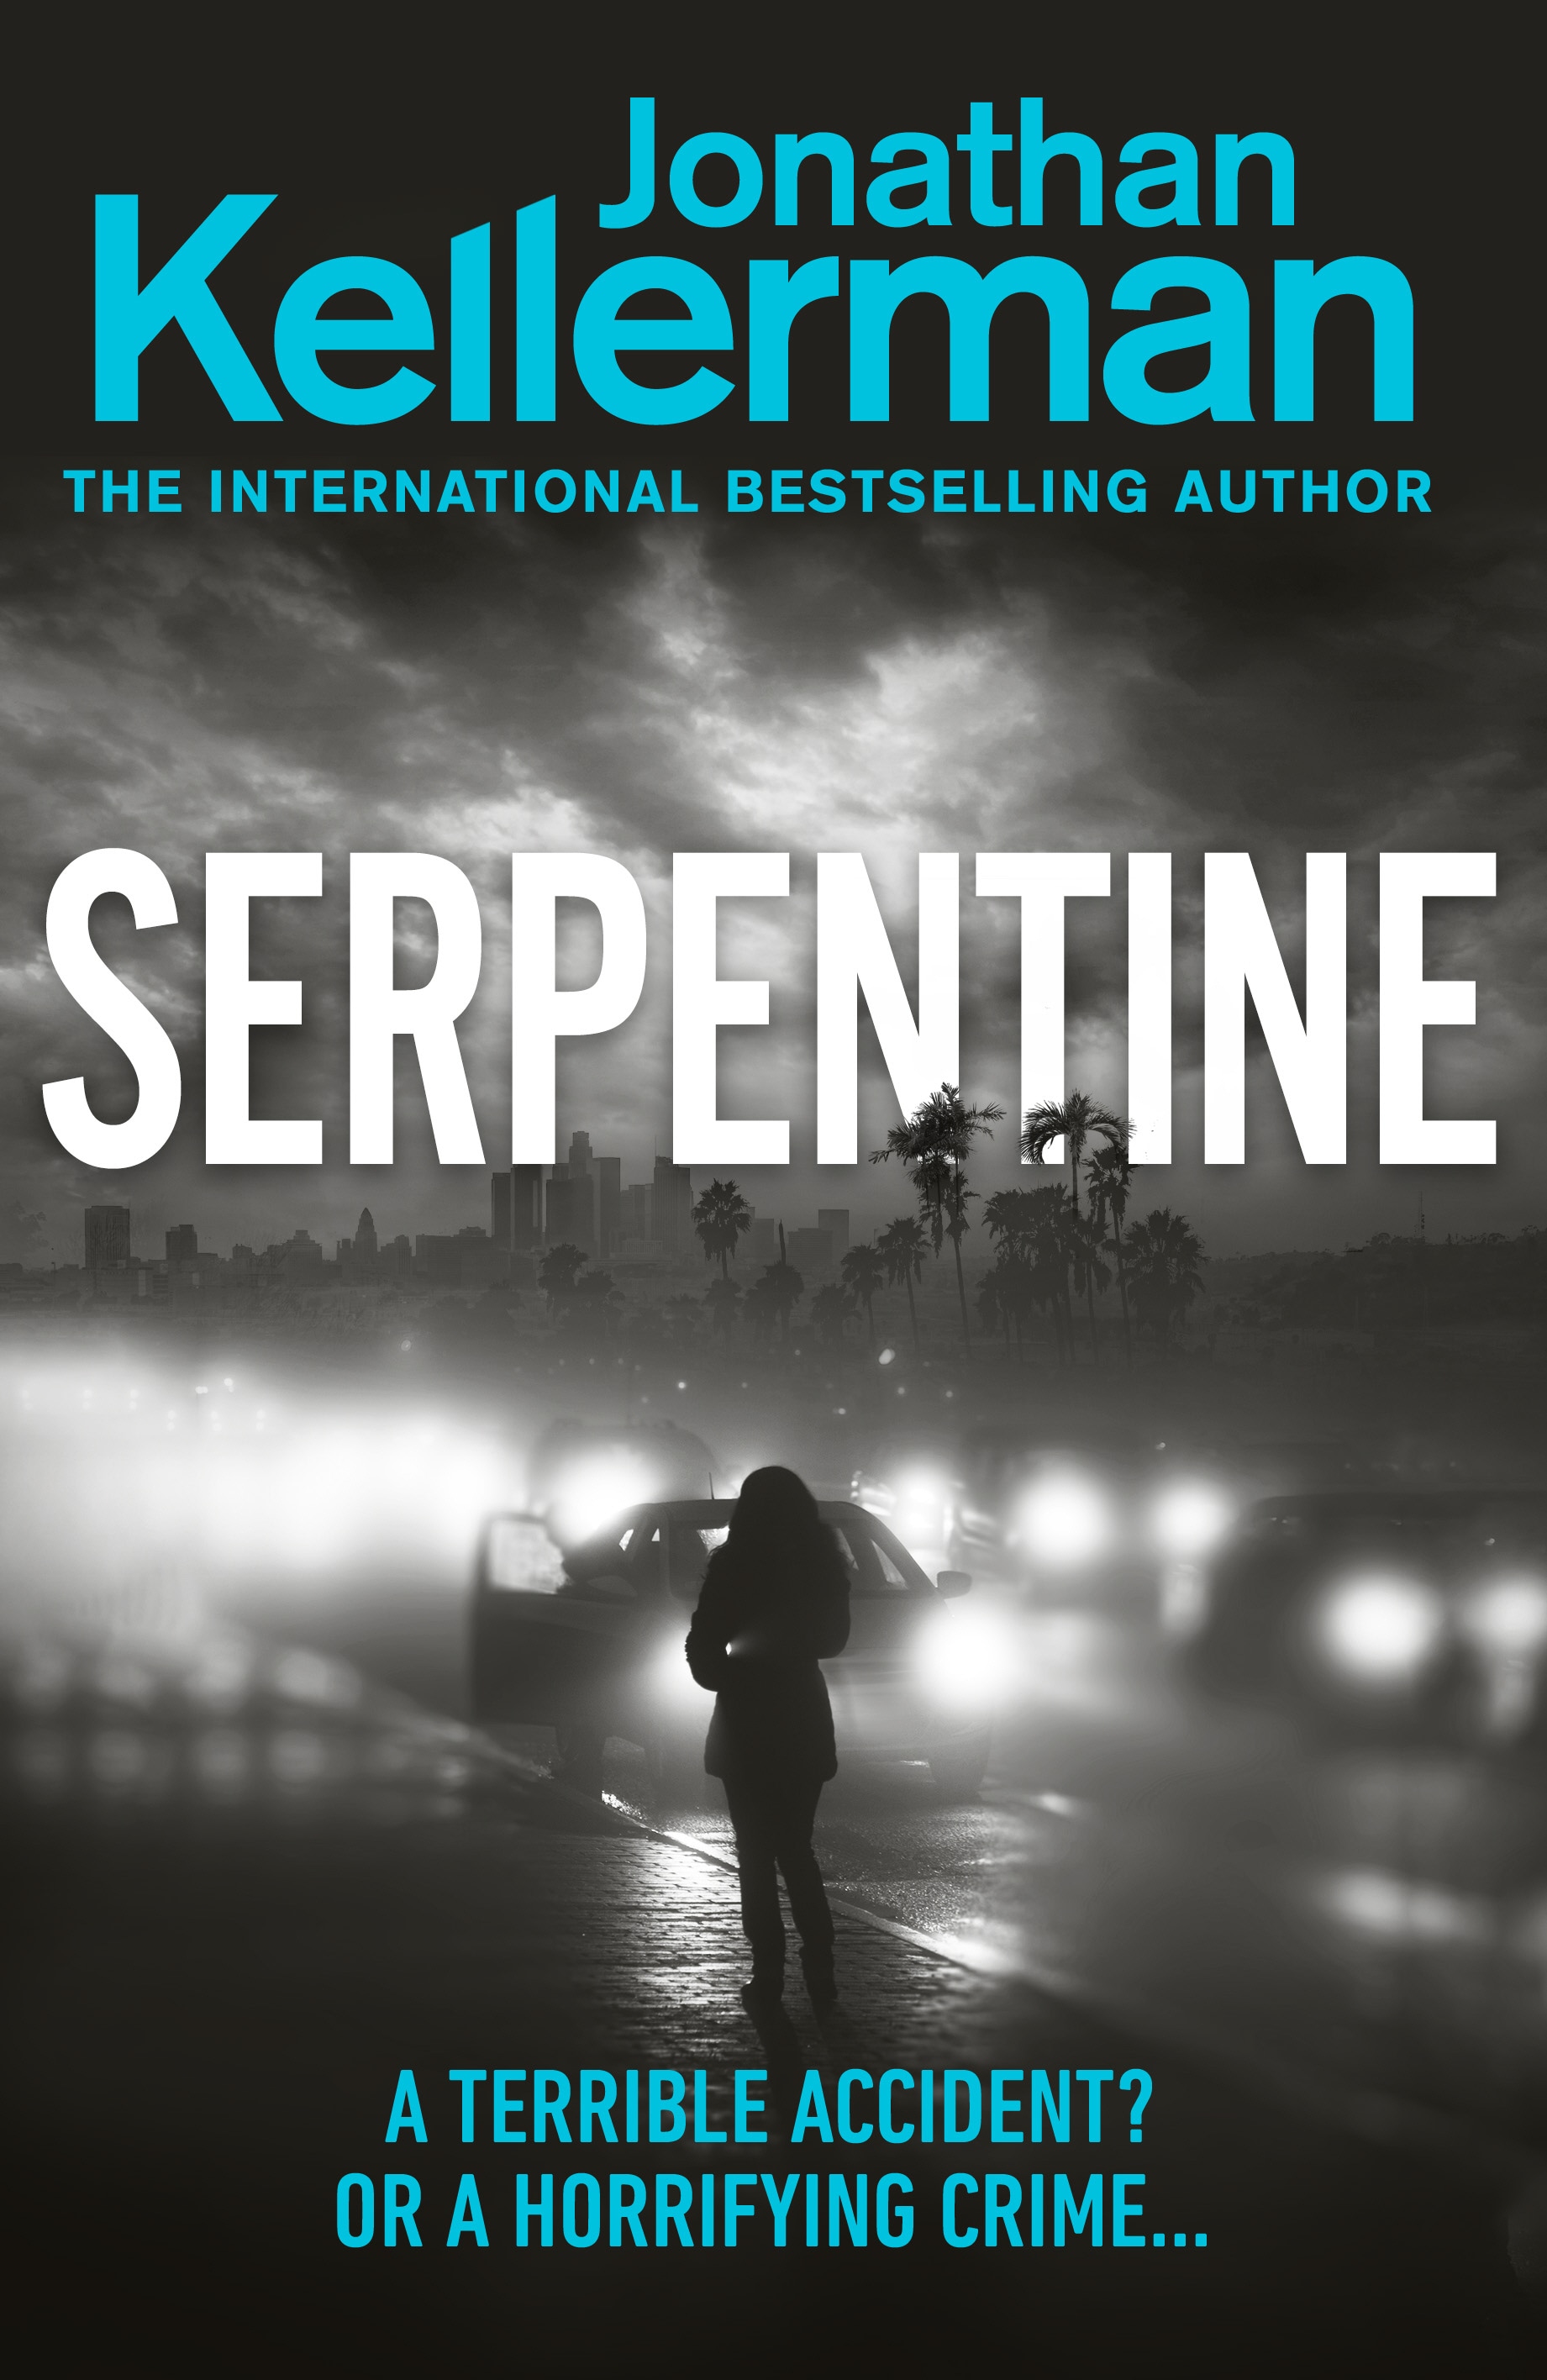 Book “Serpentine” by Jonathan Kellerman — February 4, 2021